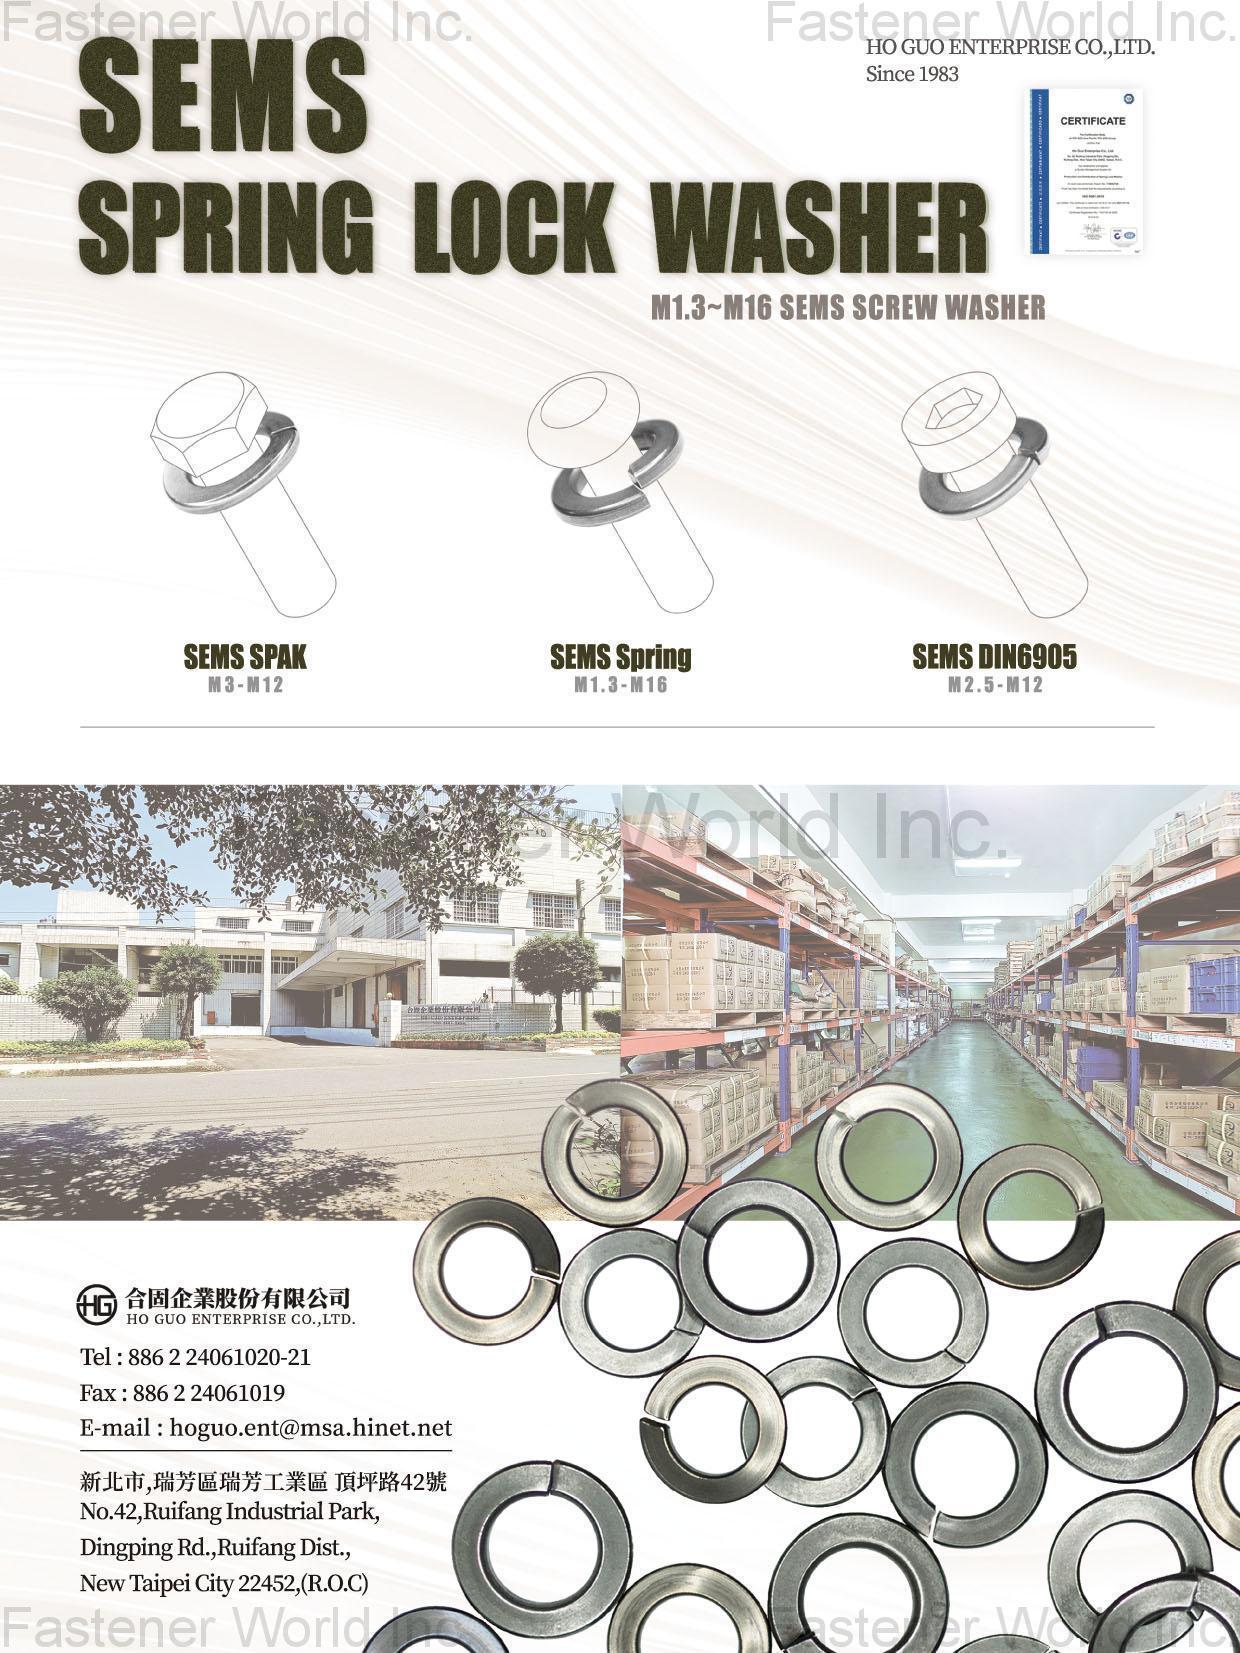 HO GUO ENTERPRISE CO., LTD. , Sems, Spring Lock Washer, Sems Screw Washer , SEMS Screws